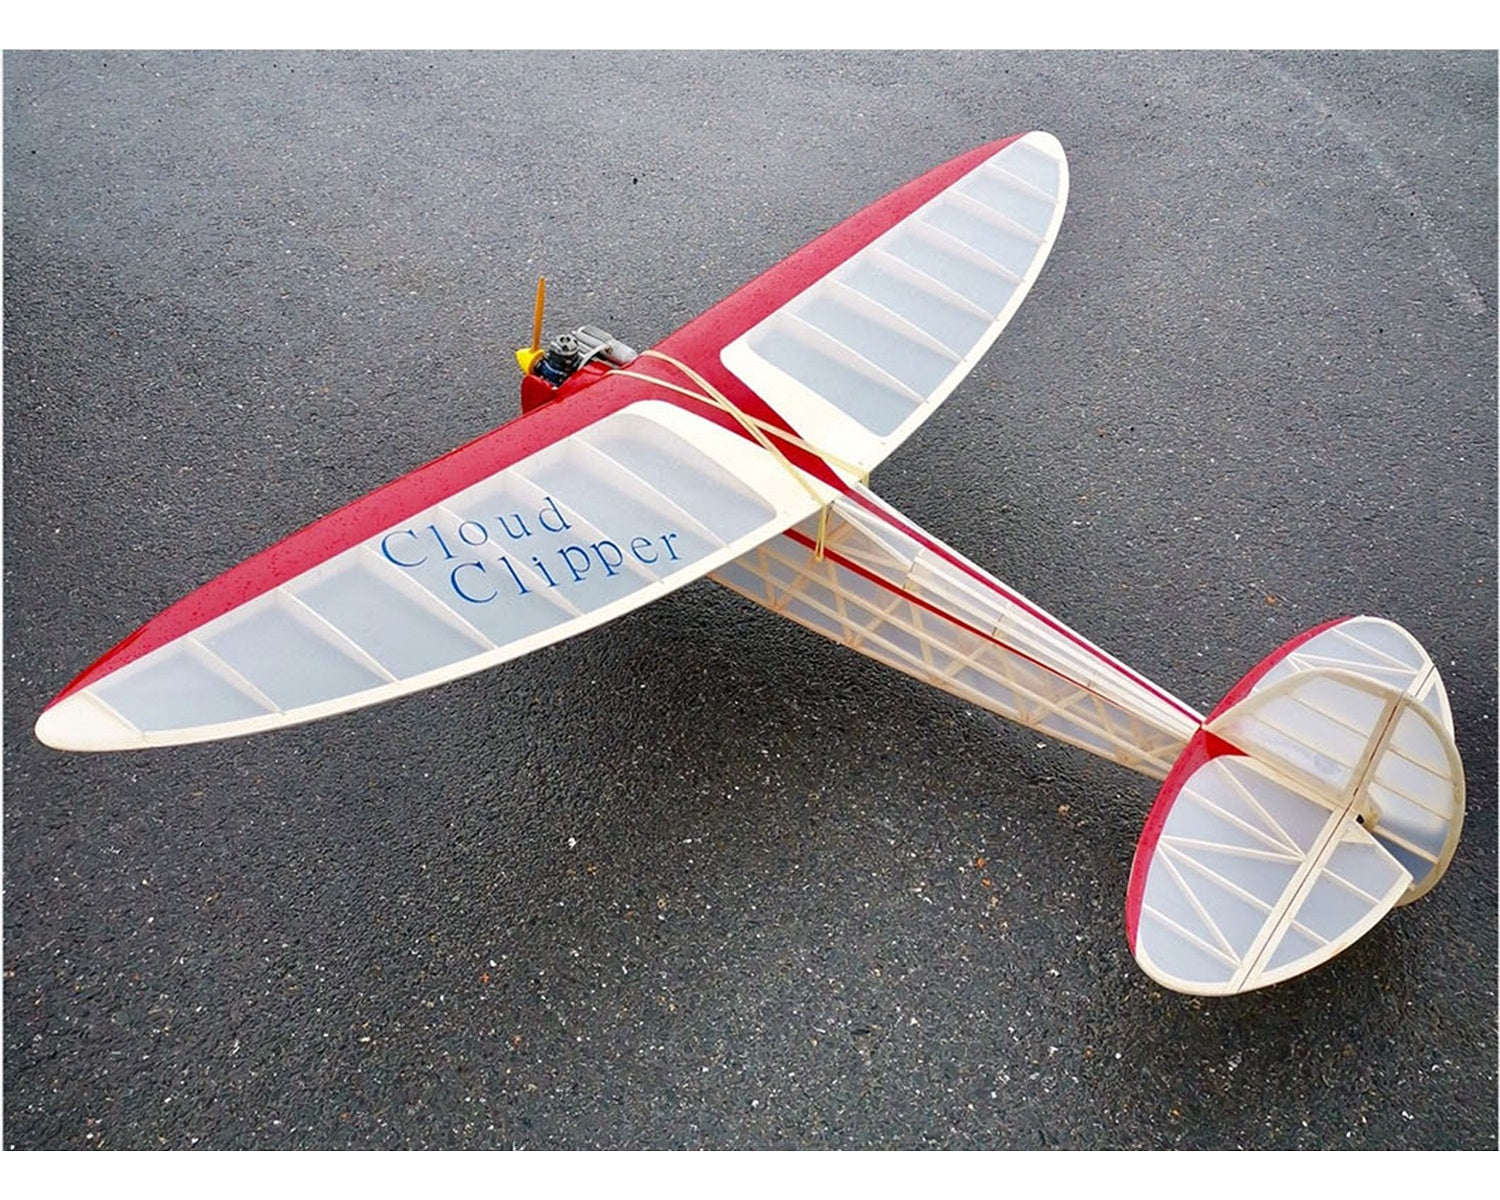 Valueplanes Balsa Cloud Clipper 71 Kit, 1800mm Wingspan